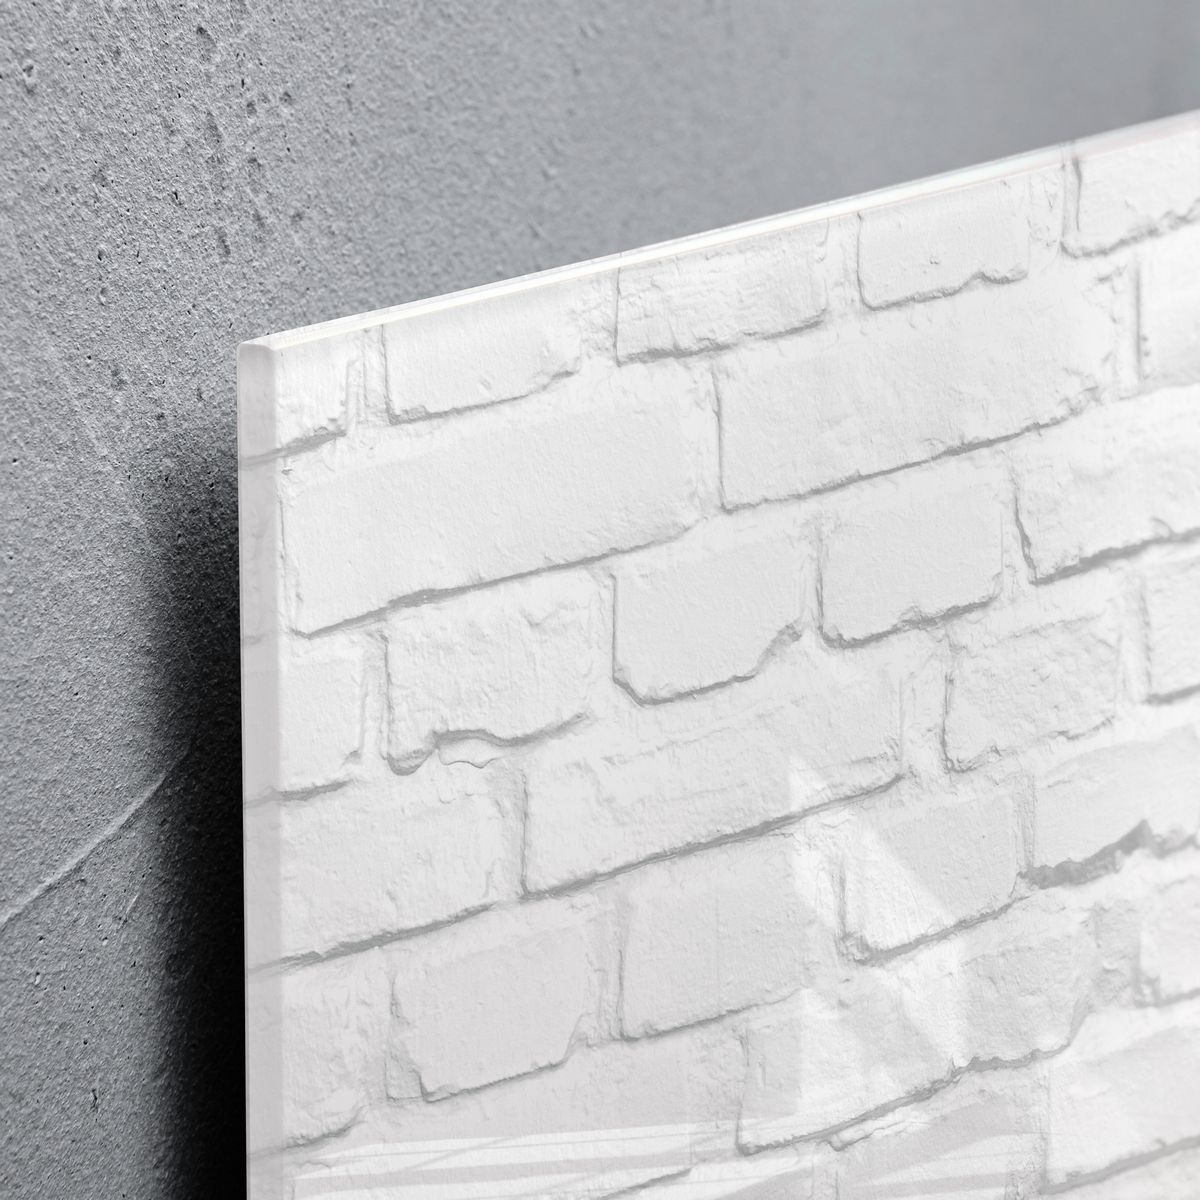 GL244 - Sigel - Lavagna Magnetica - White Stone - 130 x 55 cm 